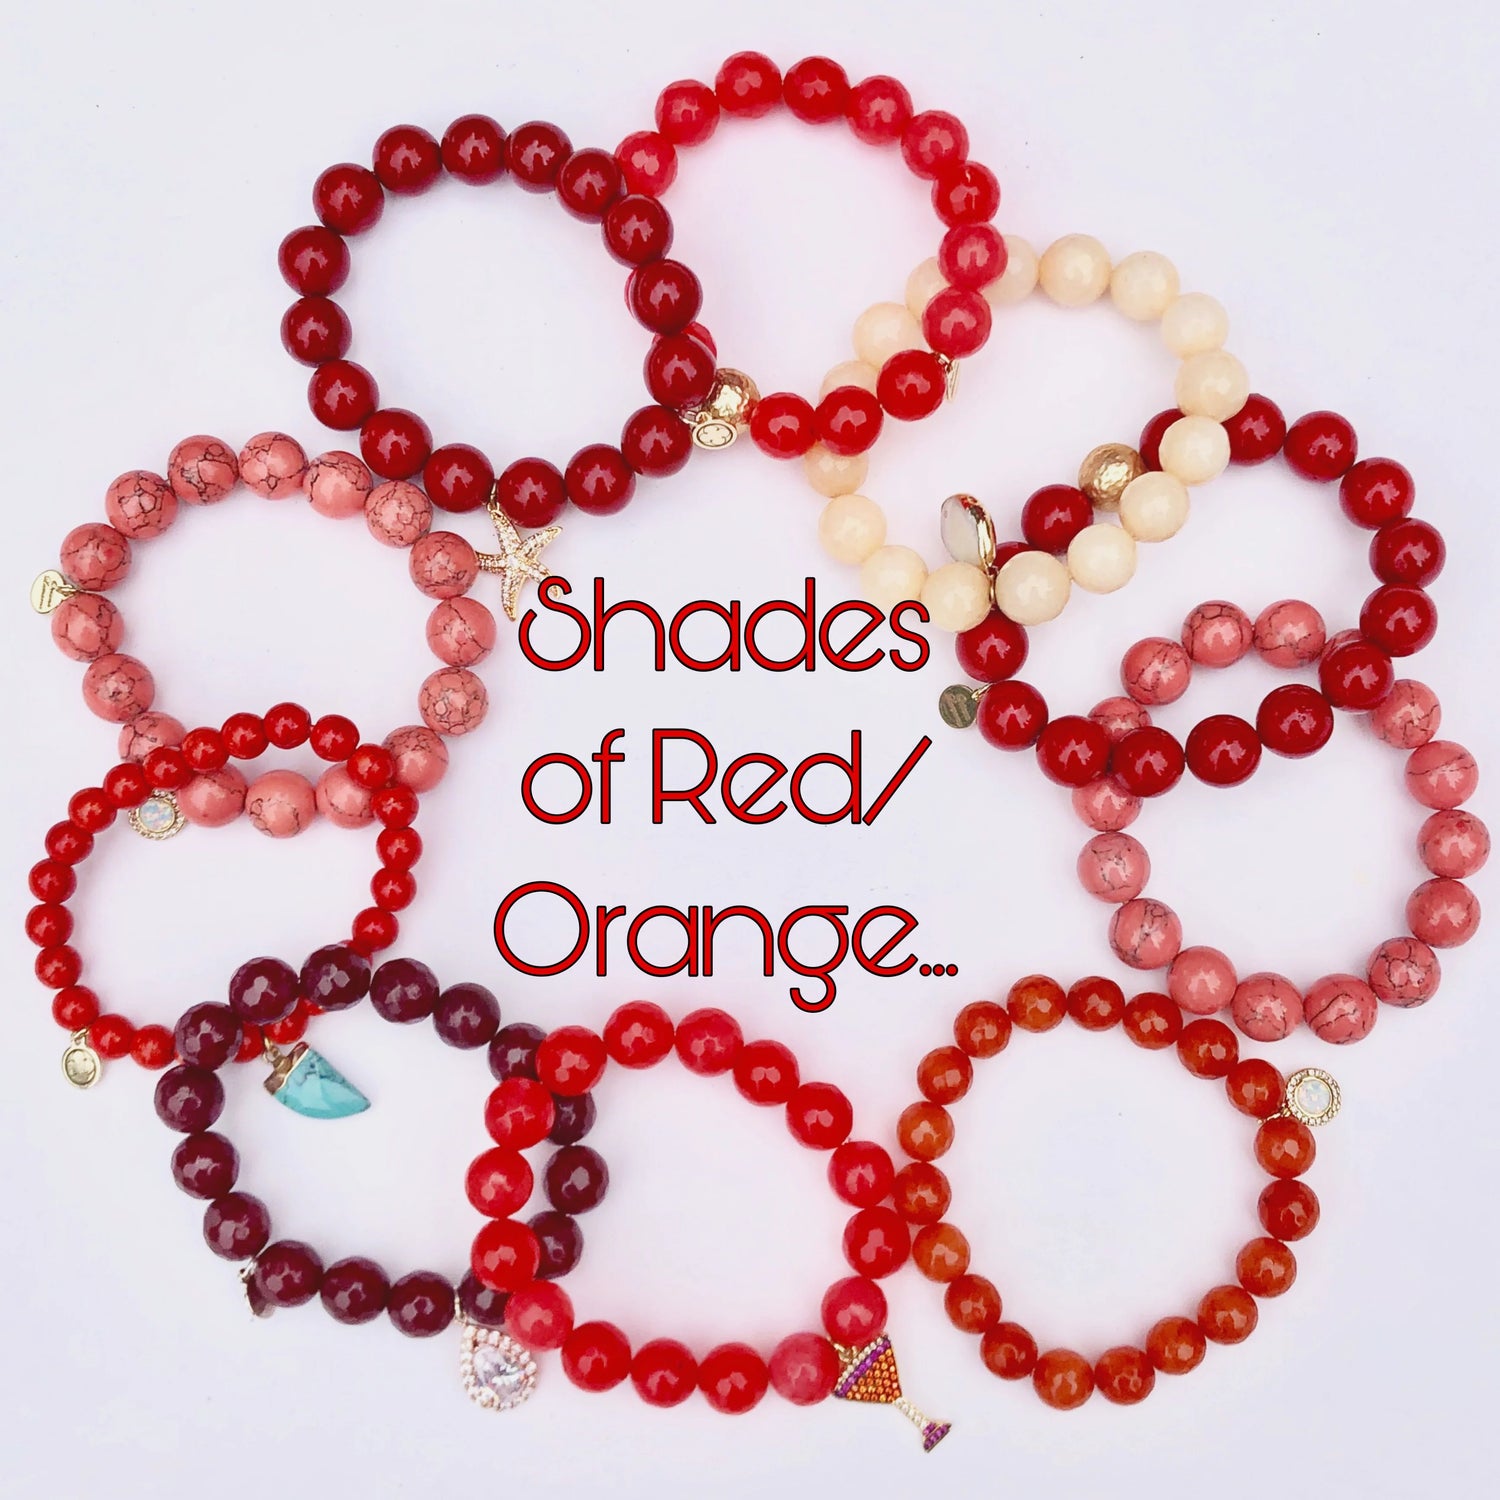 Shades of Red/Orange